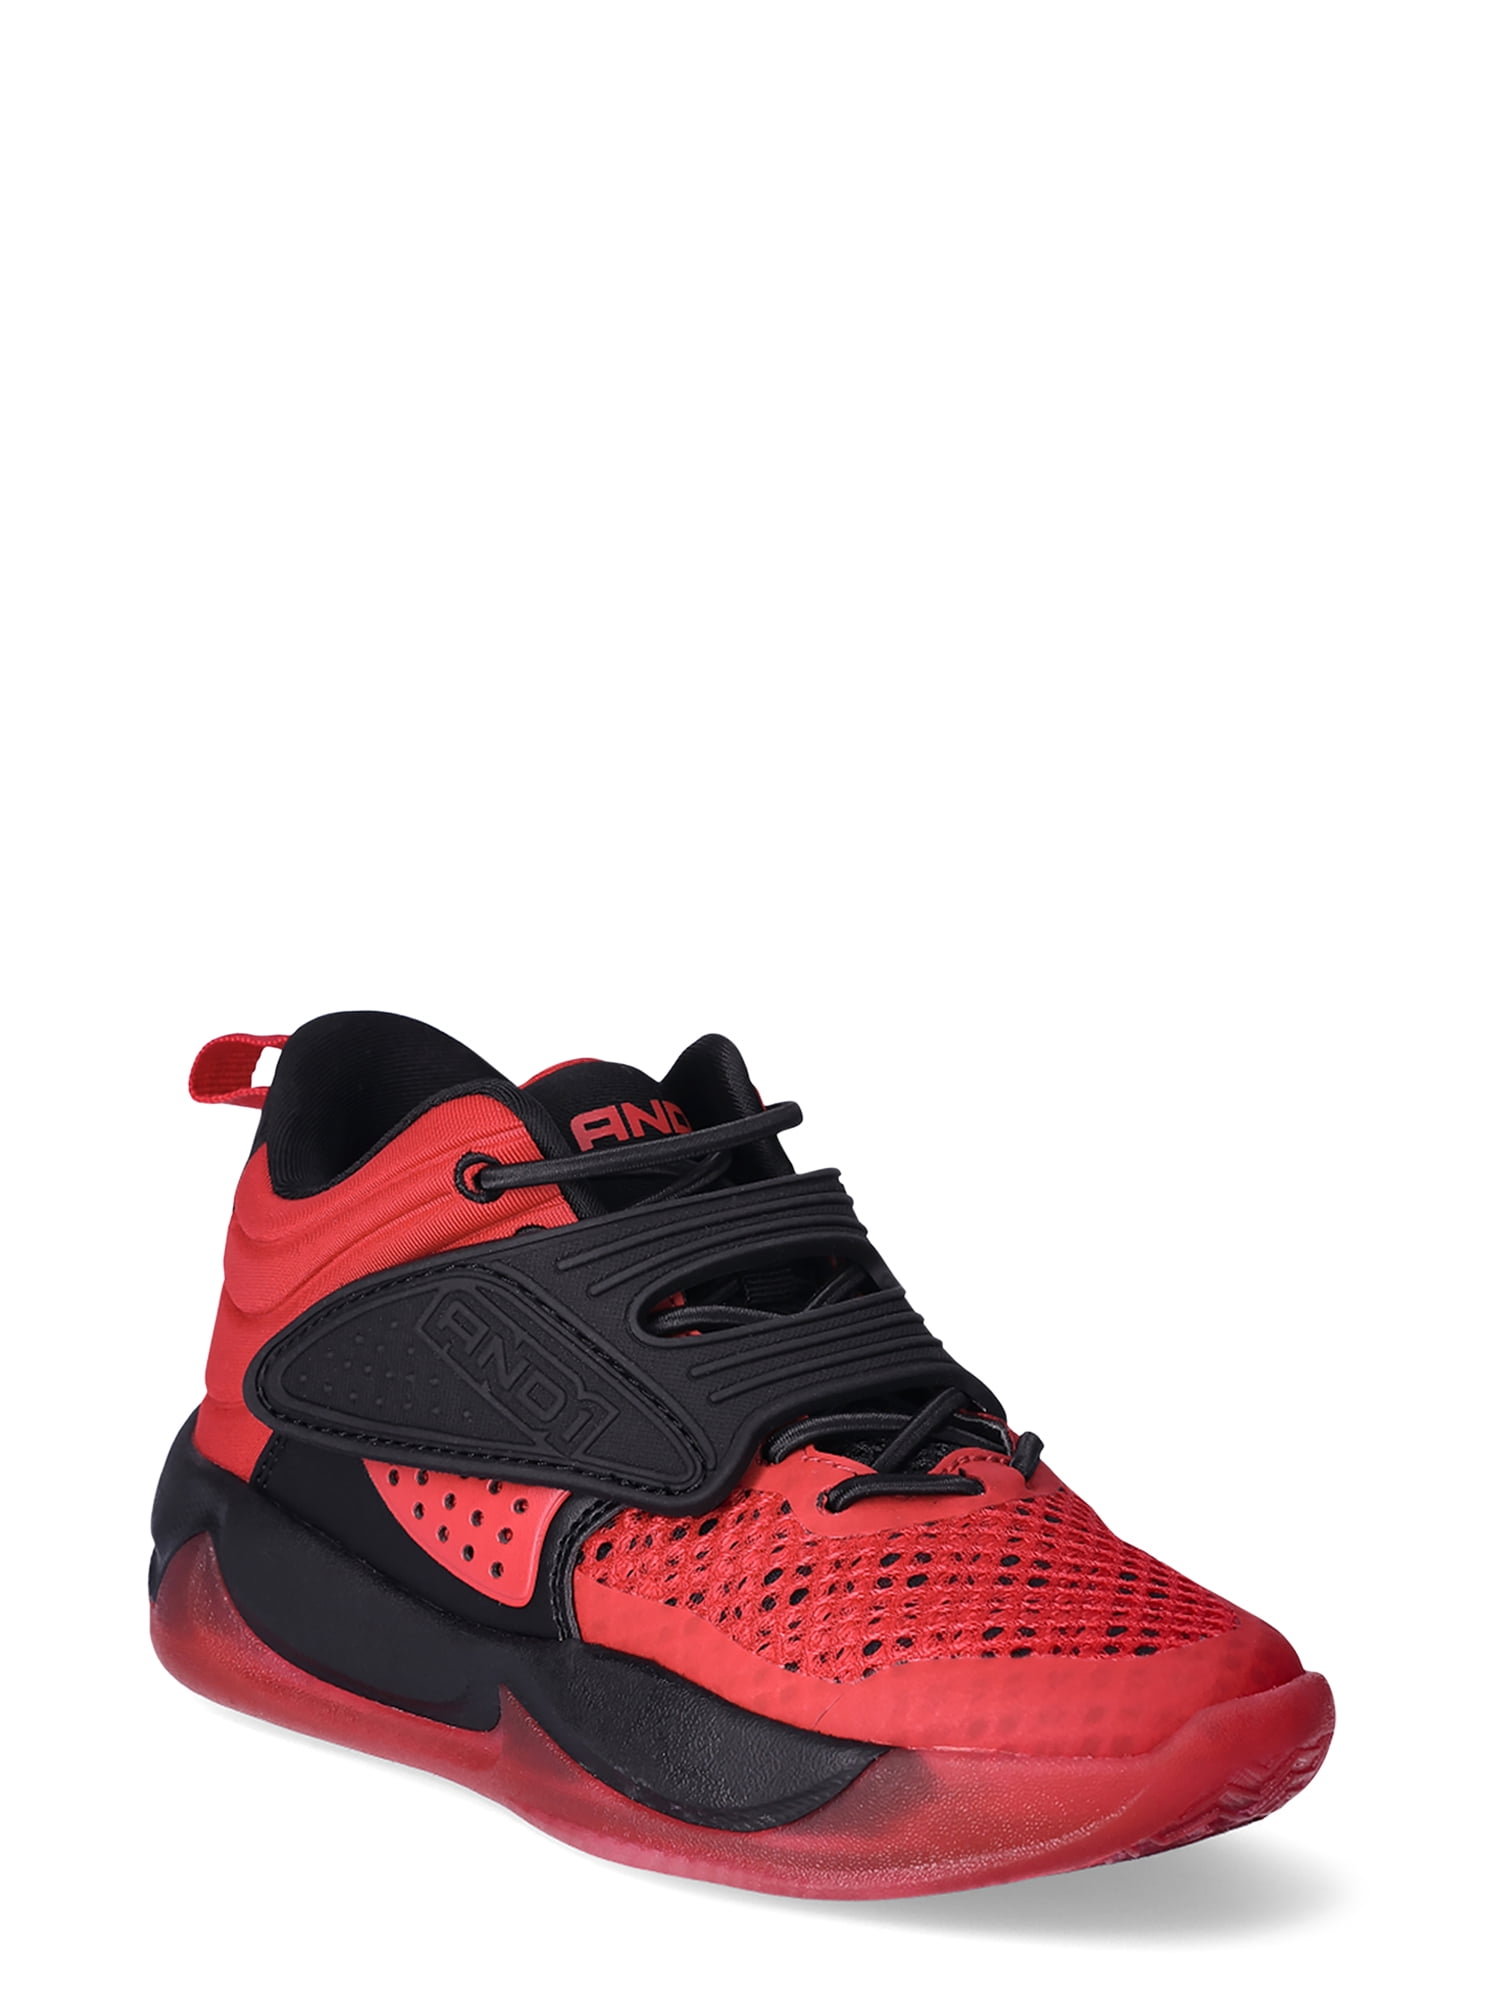 AND1 Boys Limelight Slip On Basketball Sneakers, Sizes 13-6 - Walmart.com